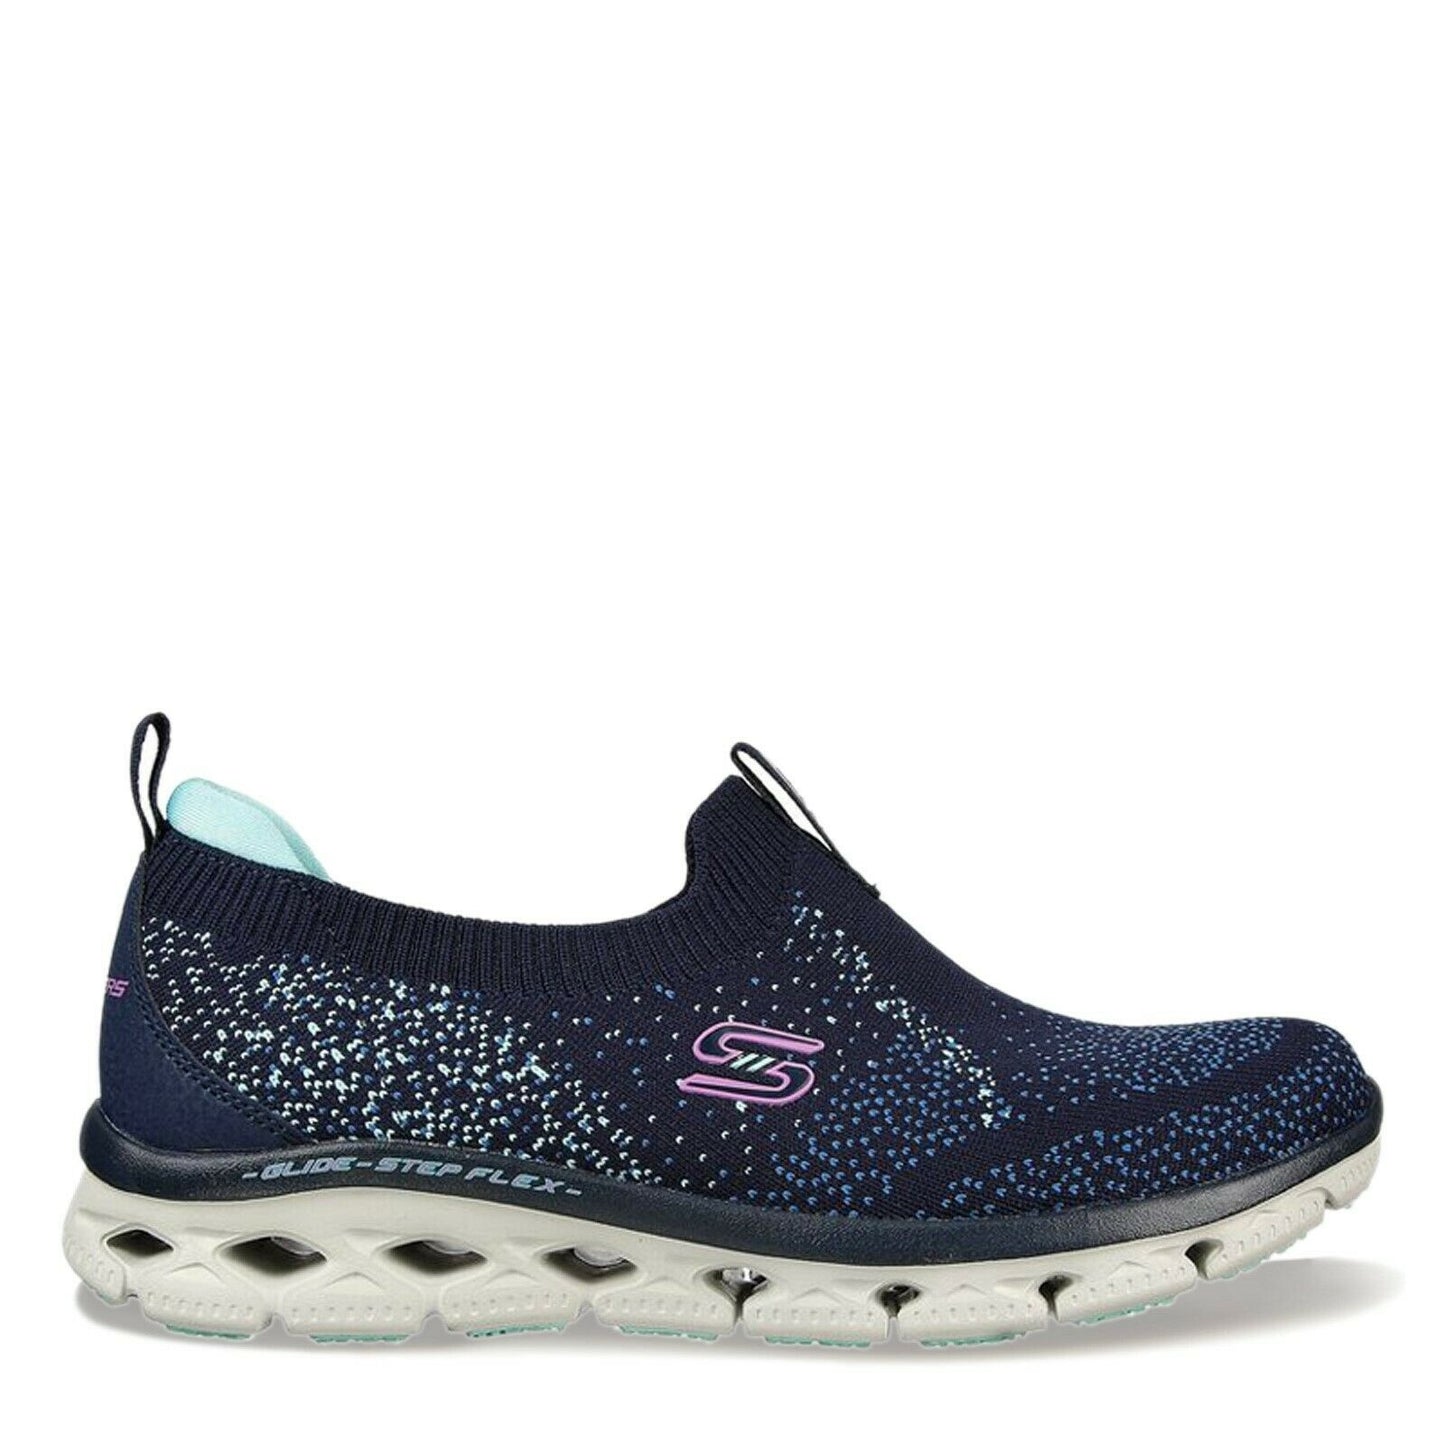 104305 Glide-Step Flex Navy/Turquoise Skechers Sneakers